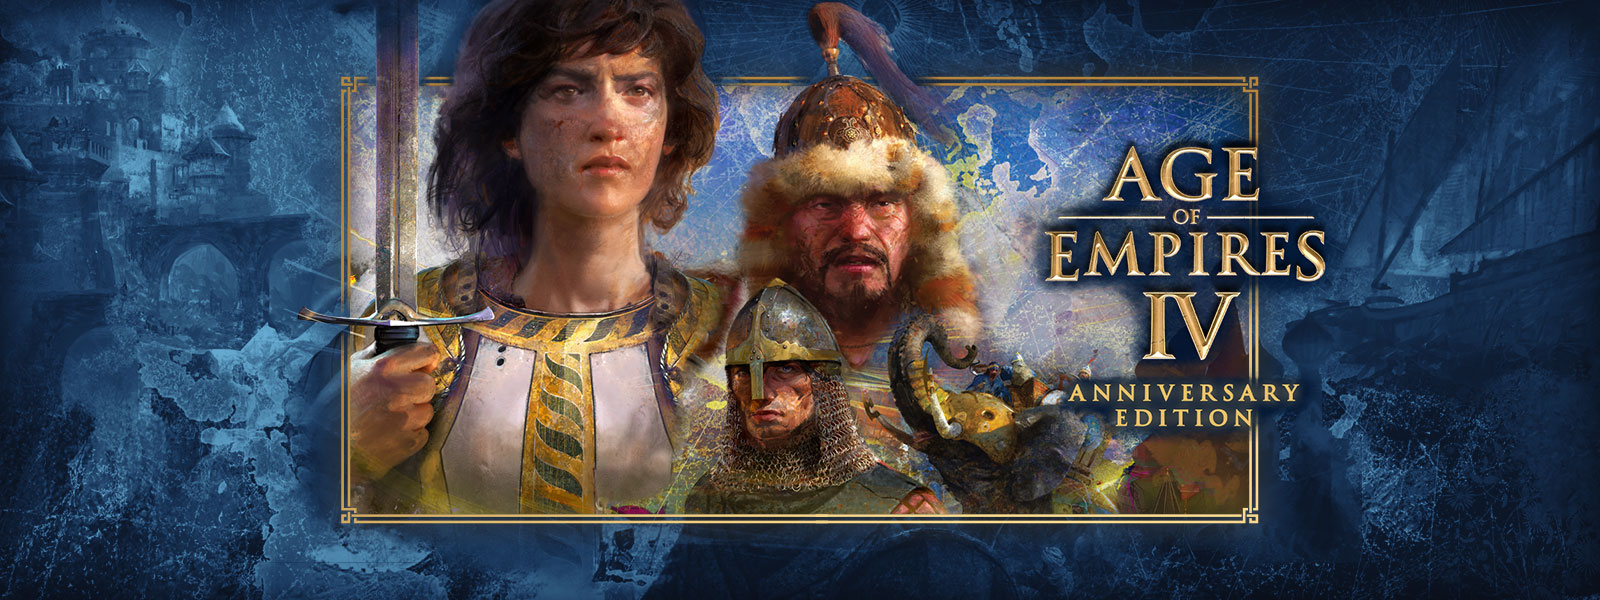 Age of Empires IV: Anniversary Edition. 캐릭터 세 명 주변에 여러 전쟁 장면과 갑주를 입은 코끼리가 있습니다.